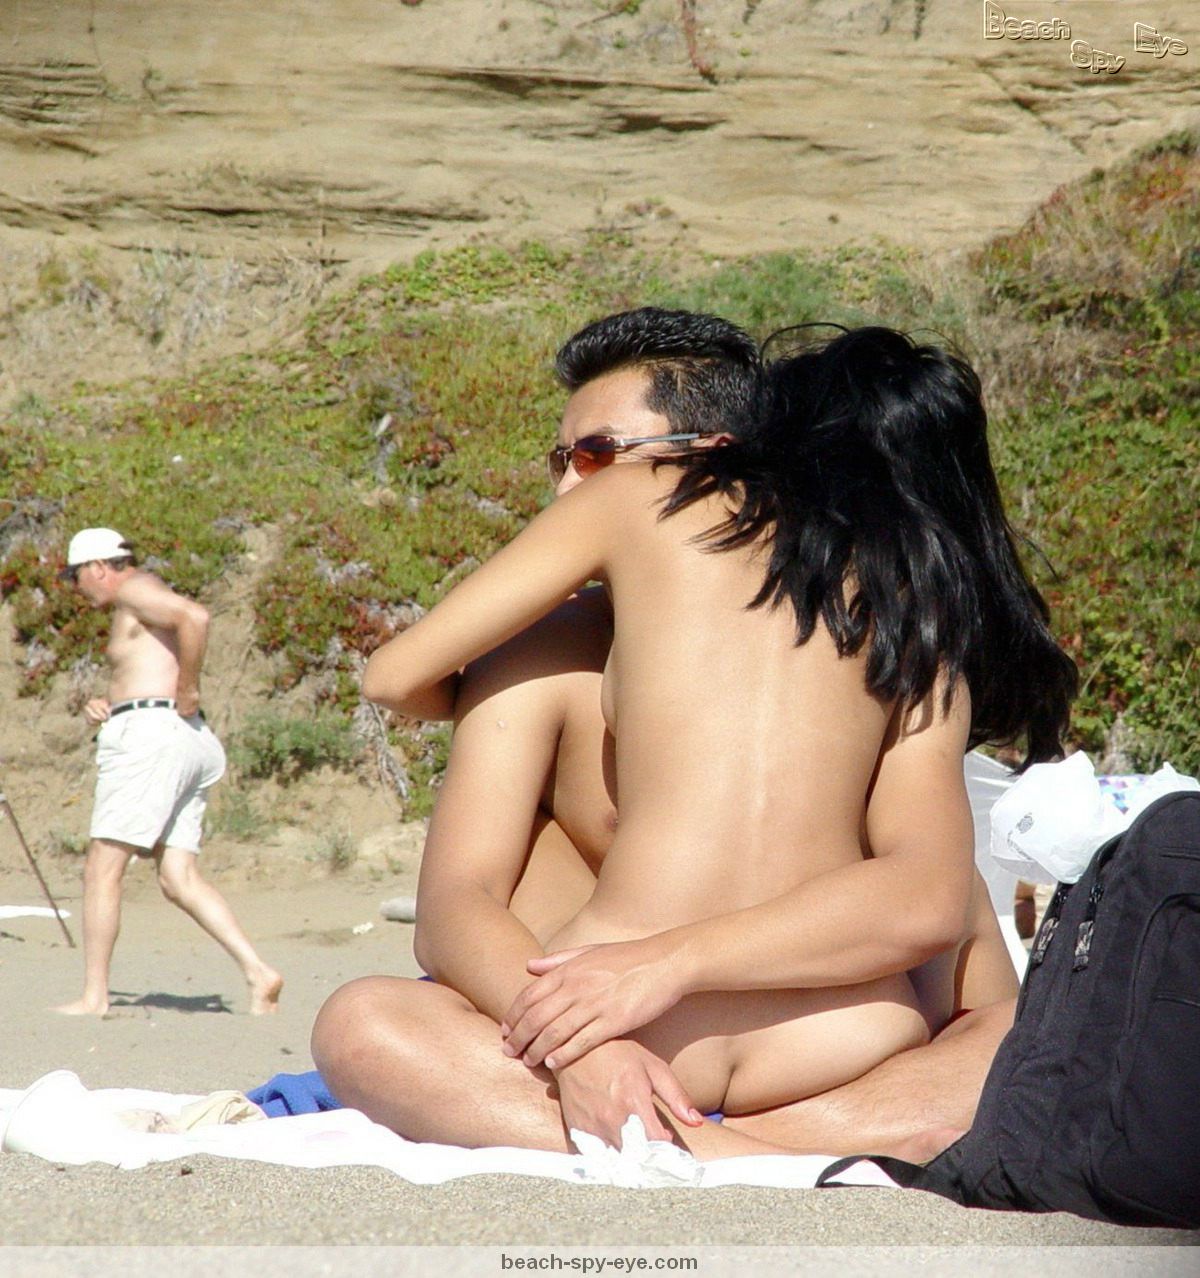 awilda cruz share naked girls in the sun photos